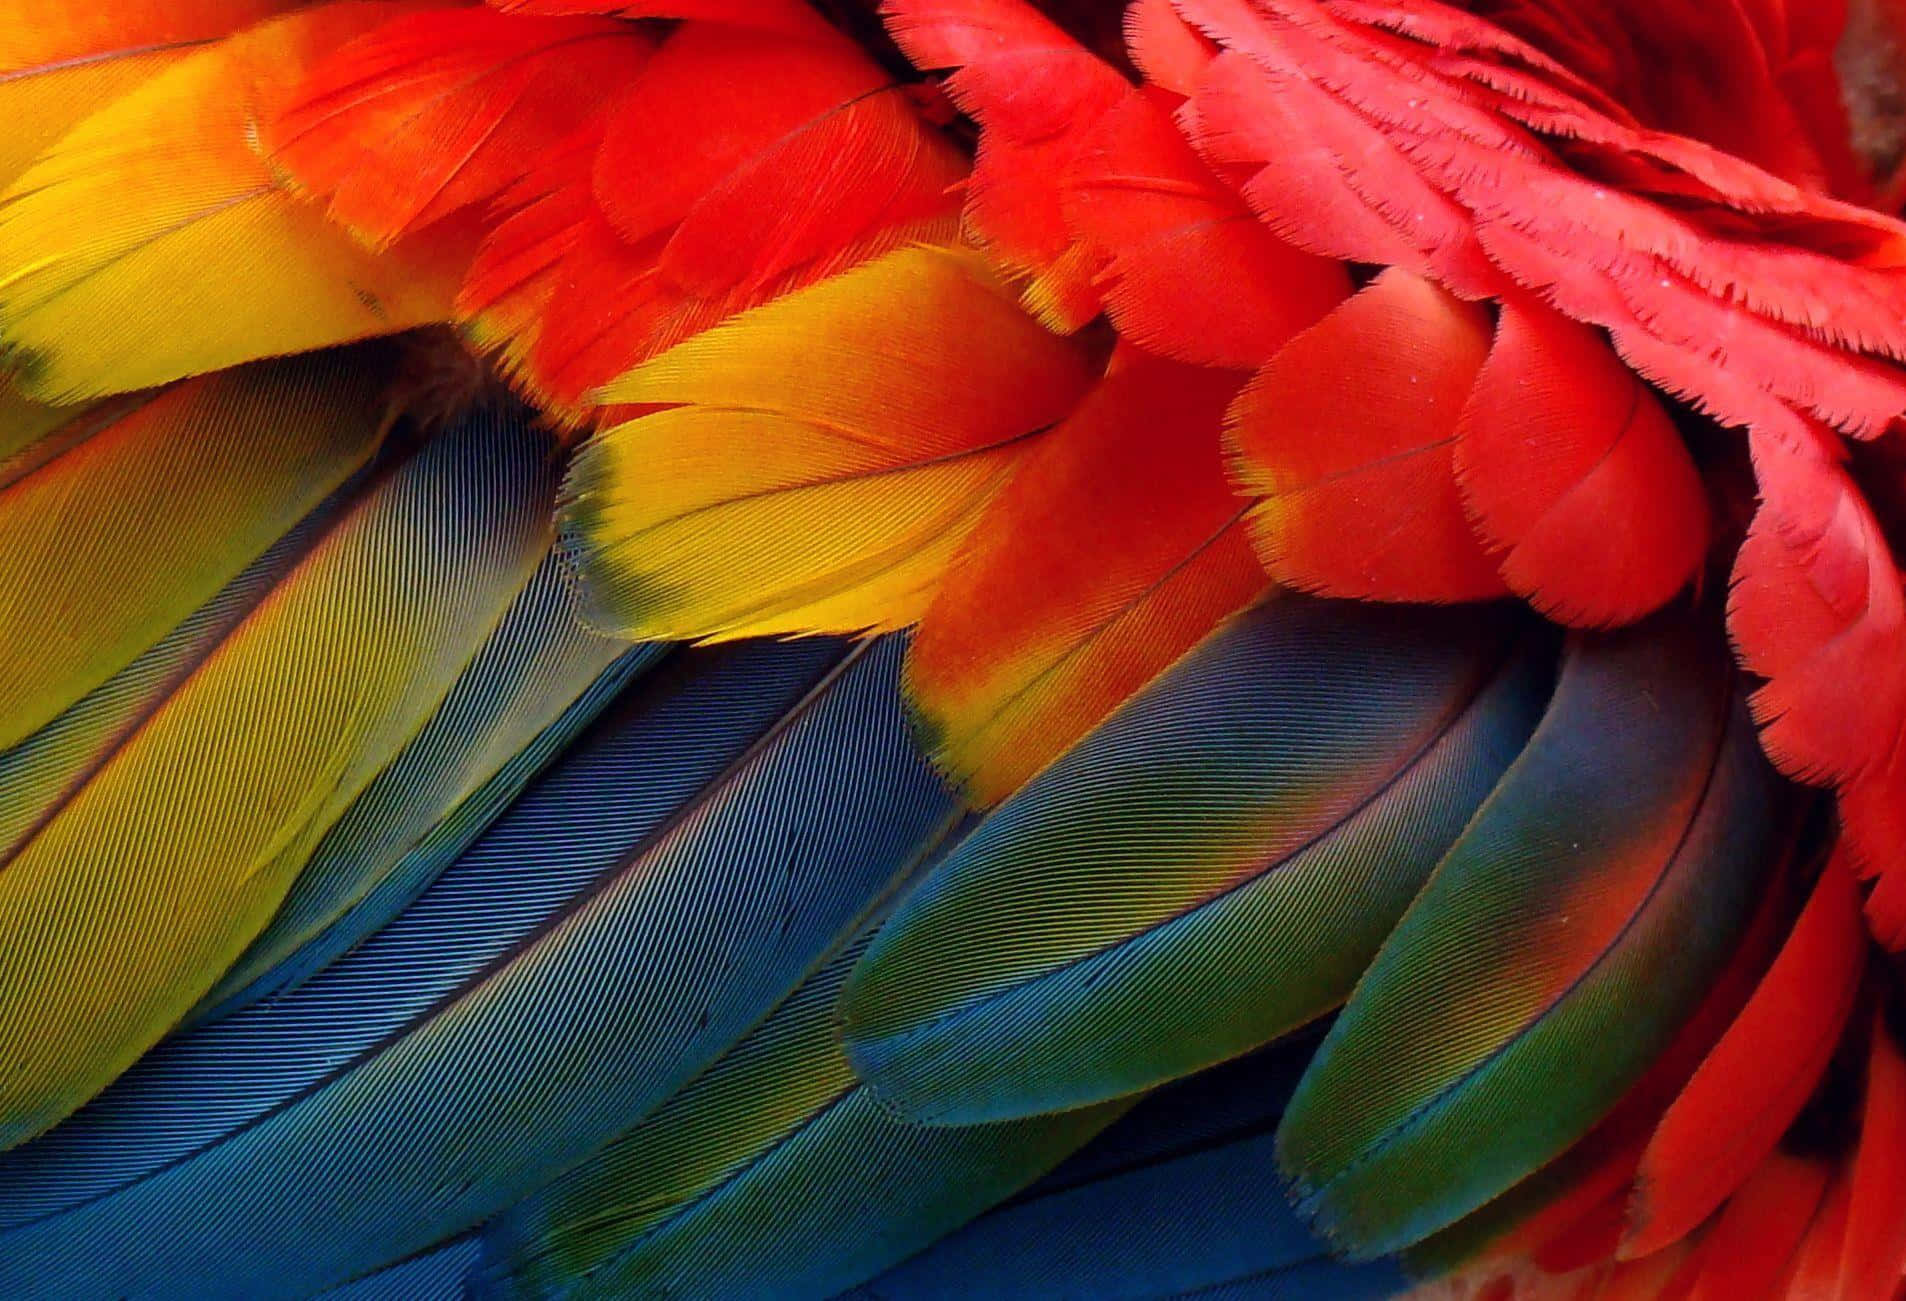 Vibrant_ Macaw_ Feathers_ Closeup.jpg Wallpaper